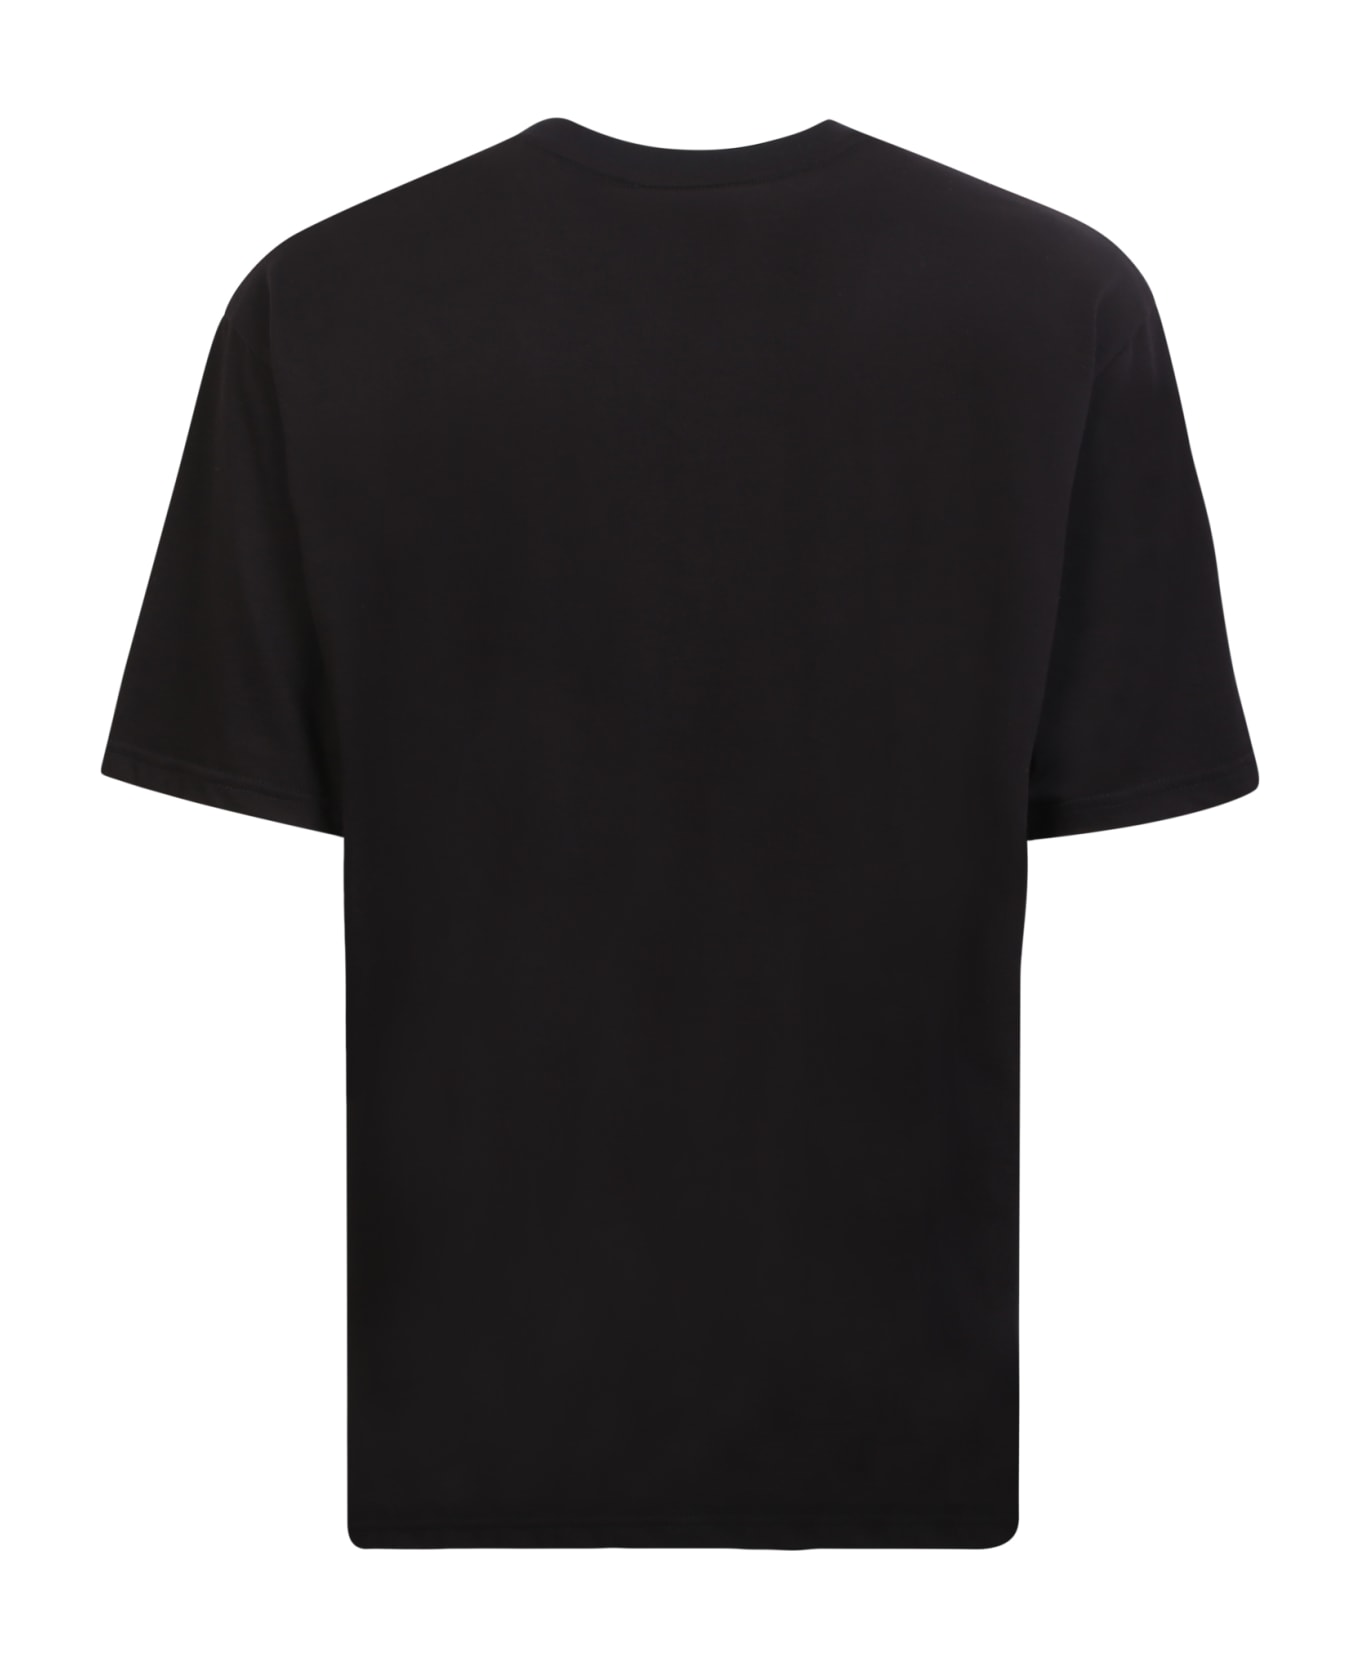 Mauna Kea Cool As Ice T-shirt - Black